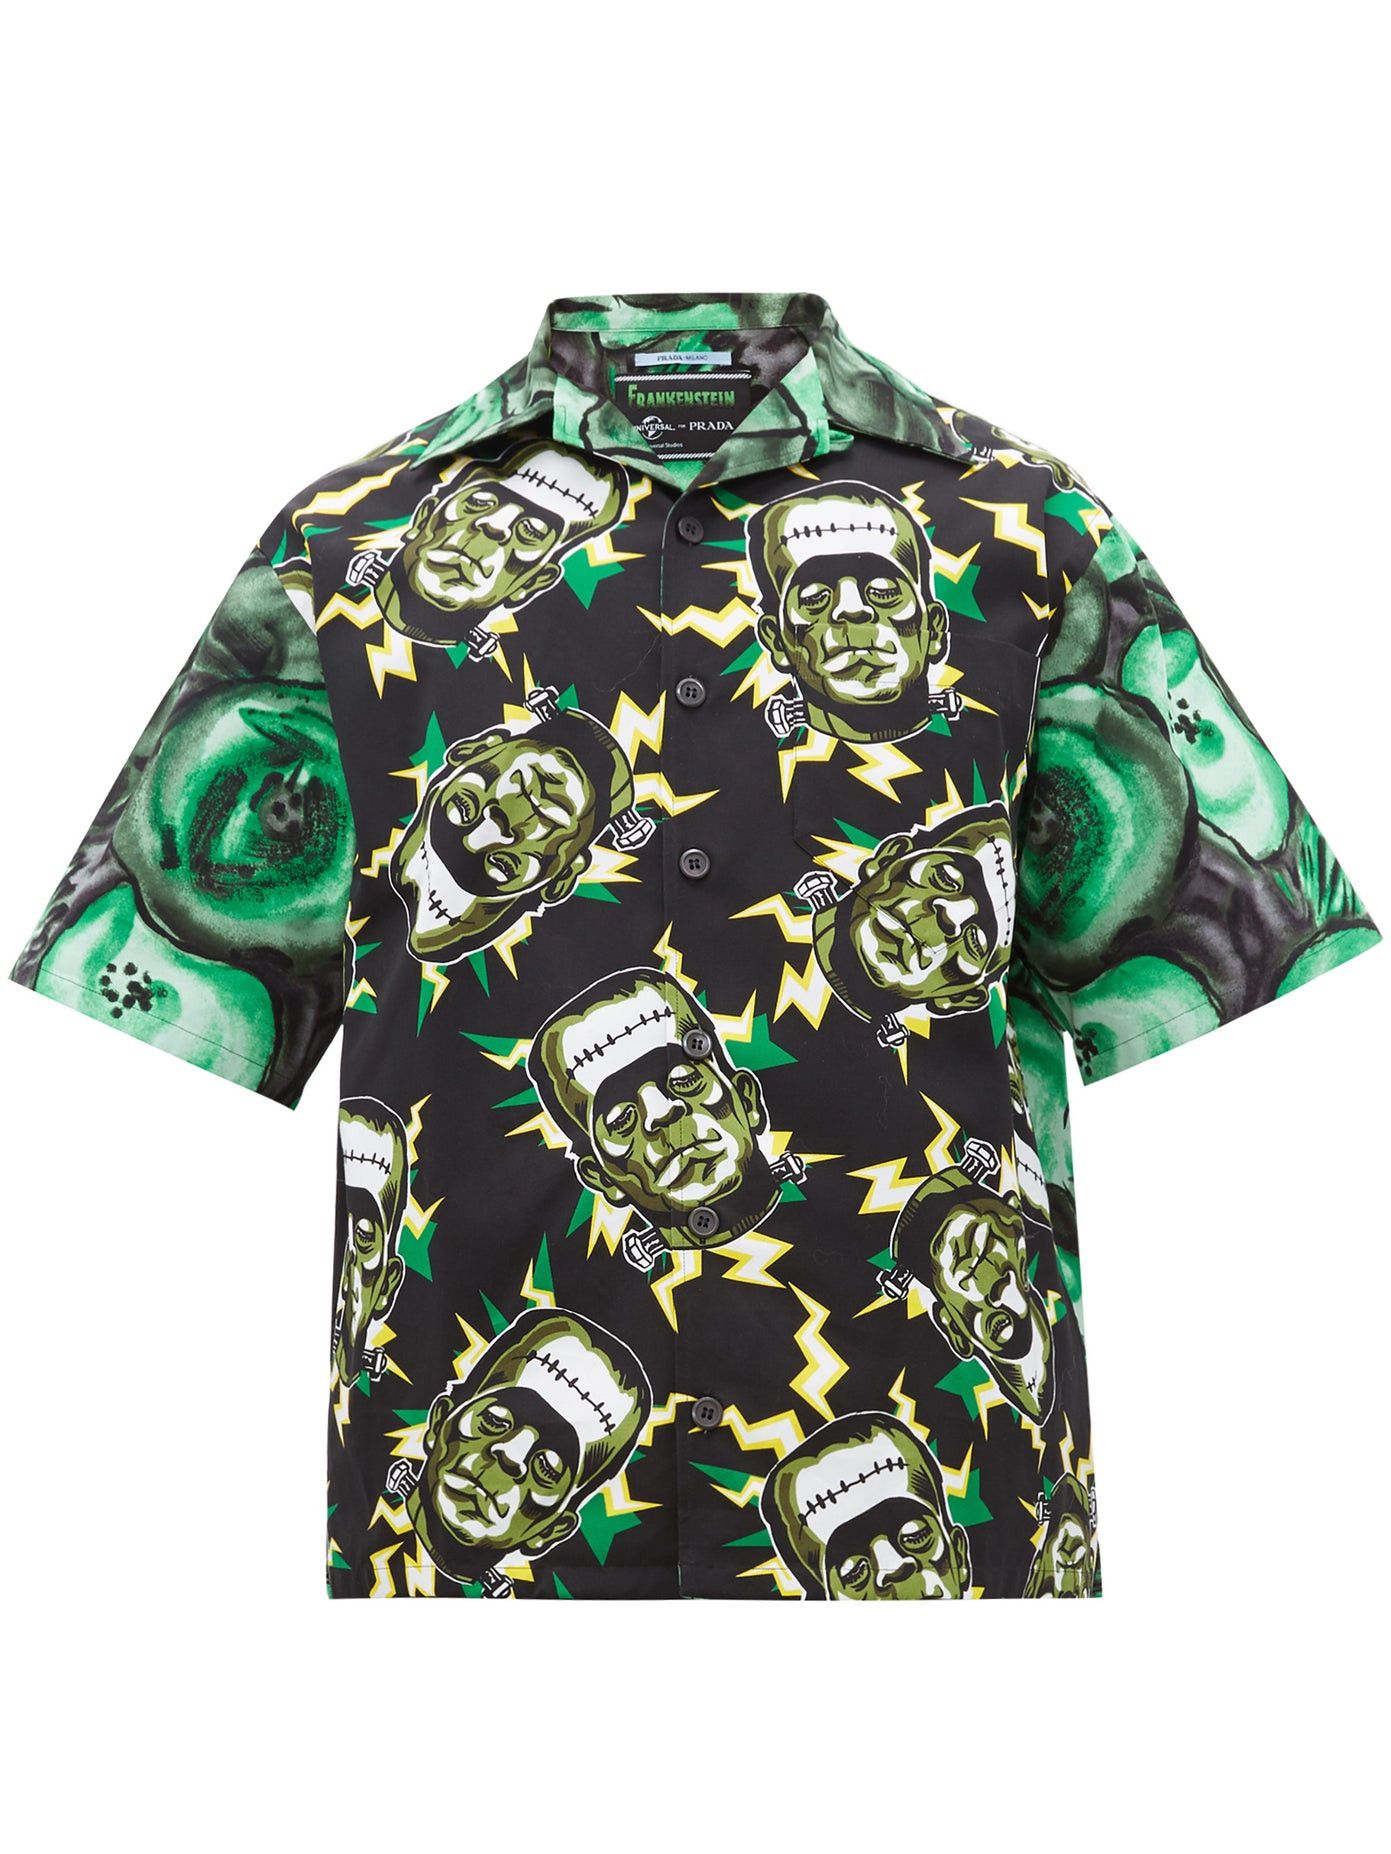 Prada Prada Frankenstein Monster print bowling poplin shirt | Grailed